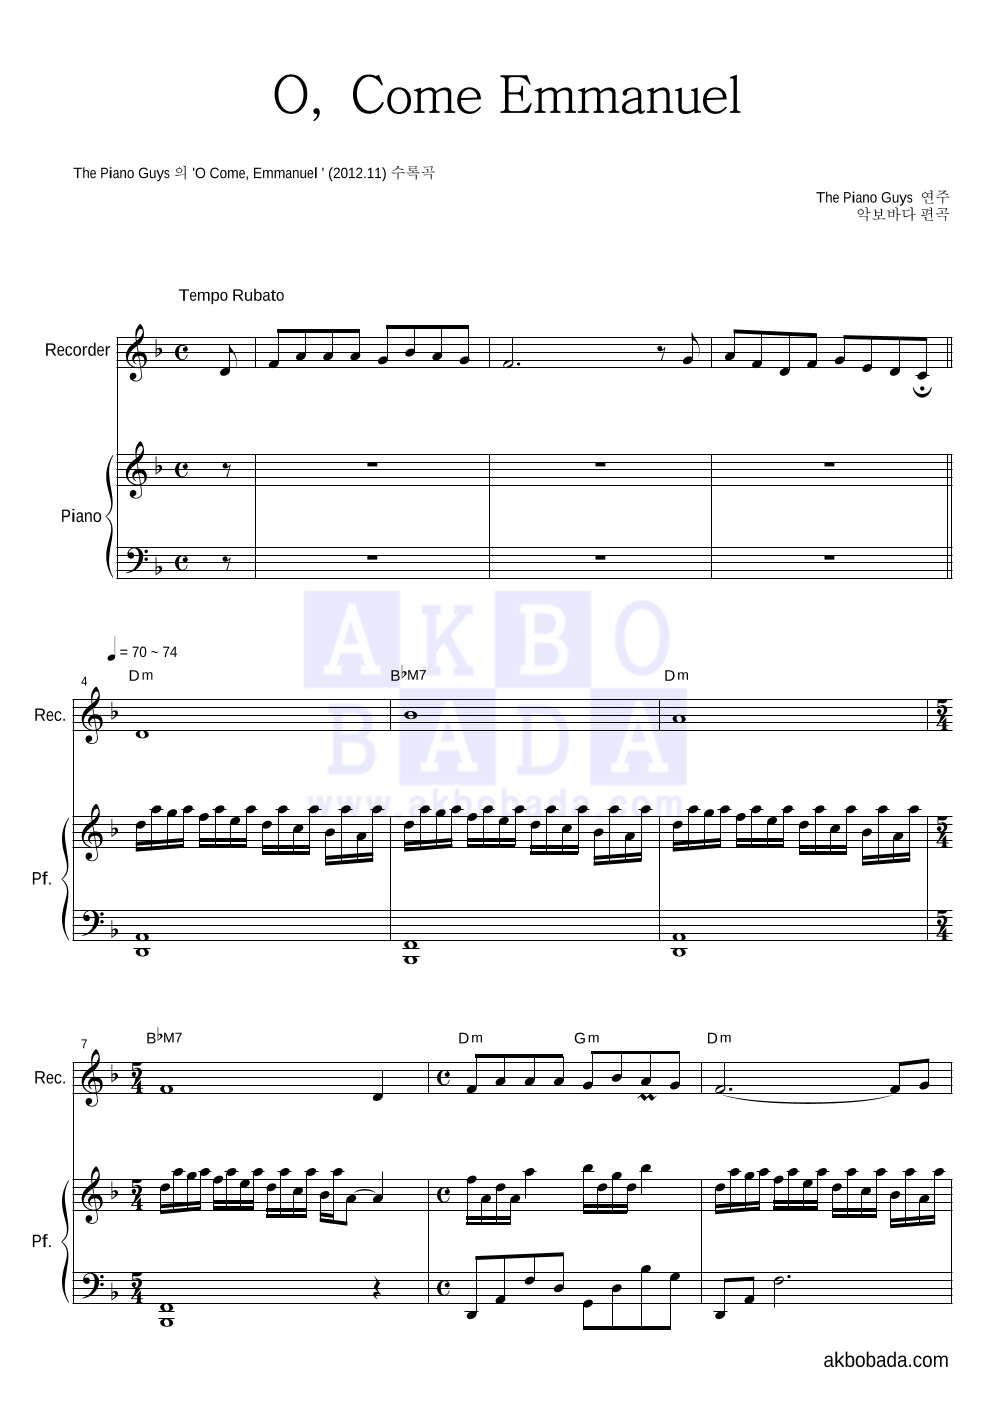 The Piano Guys - O Come, Emmanuel 리코더&피아노 악보 